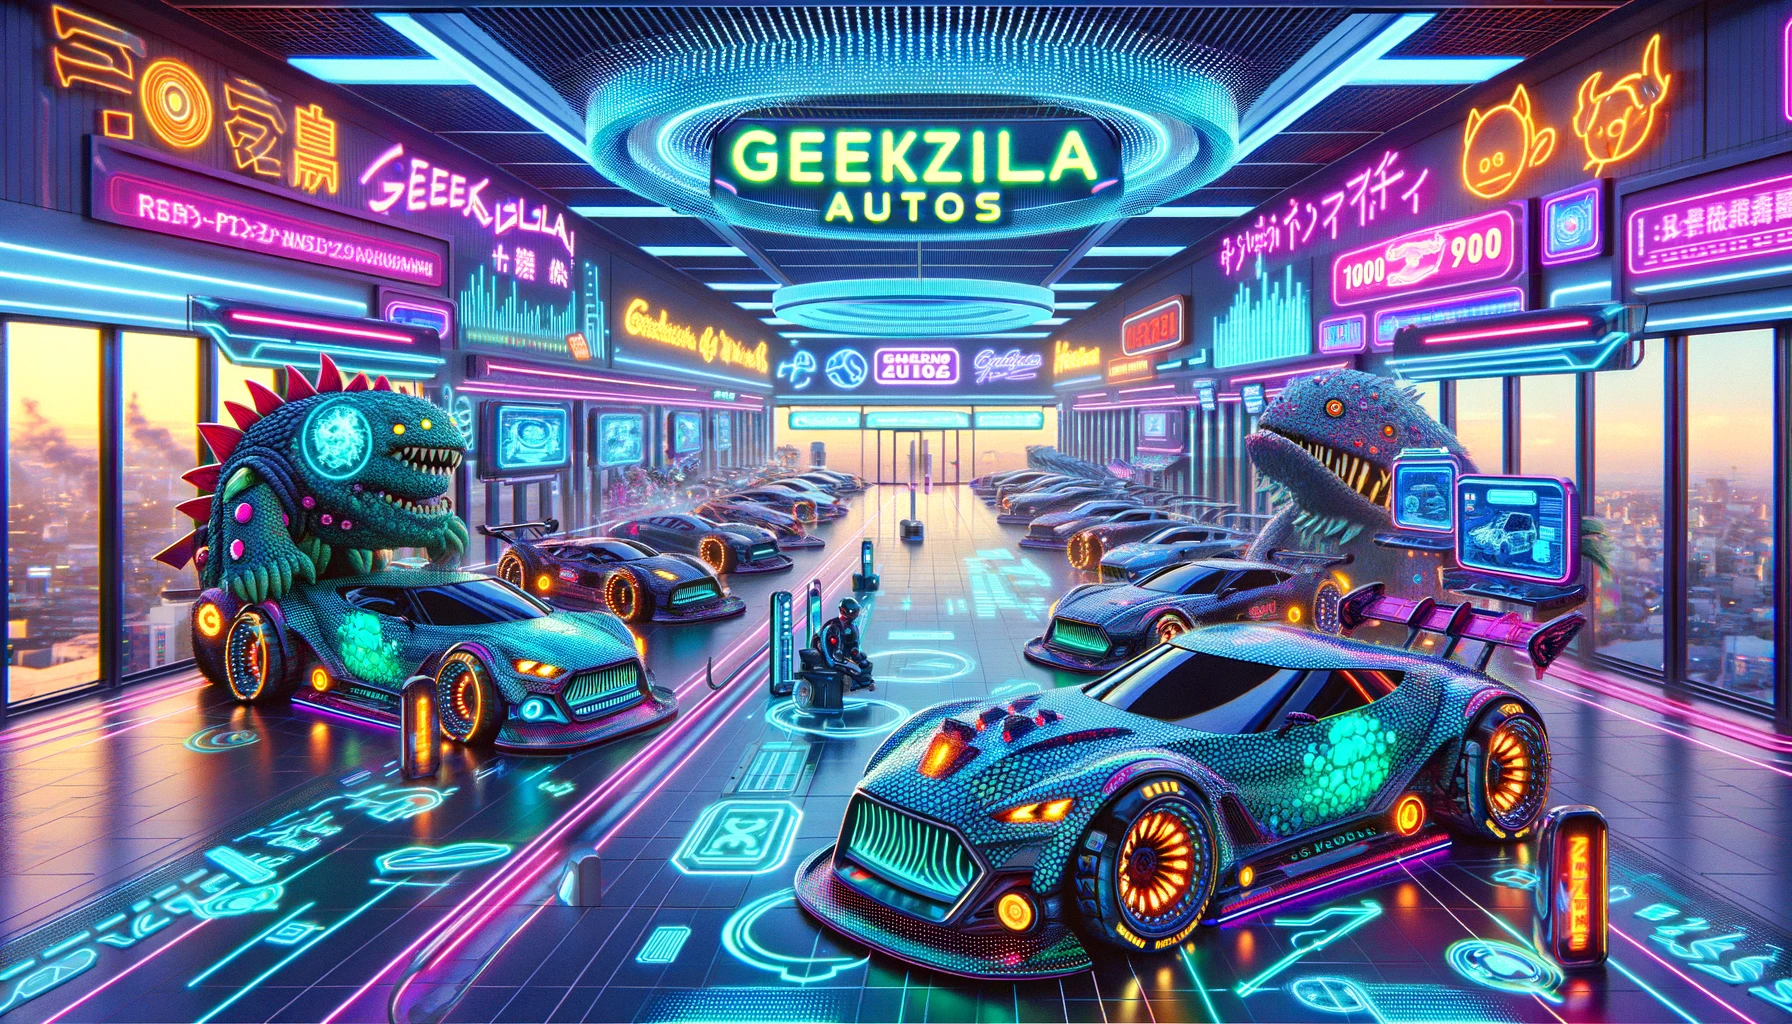 Geekzilla Autos